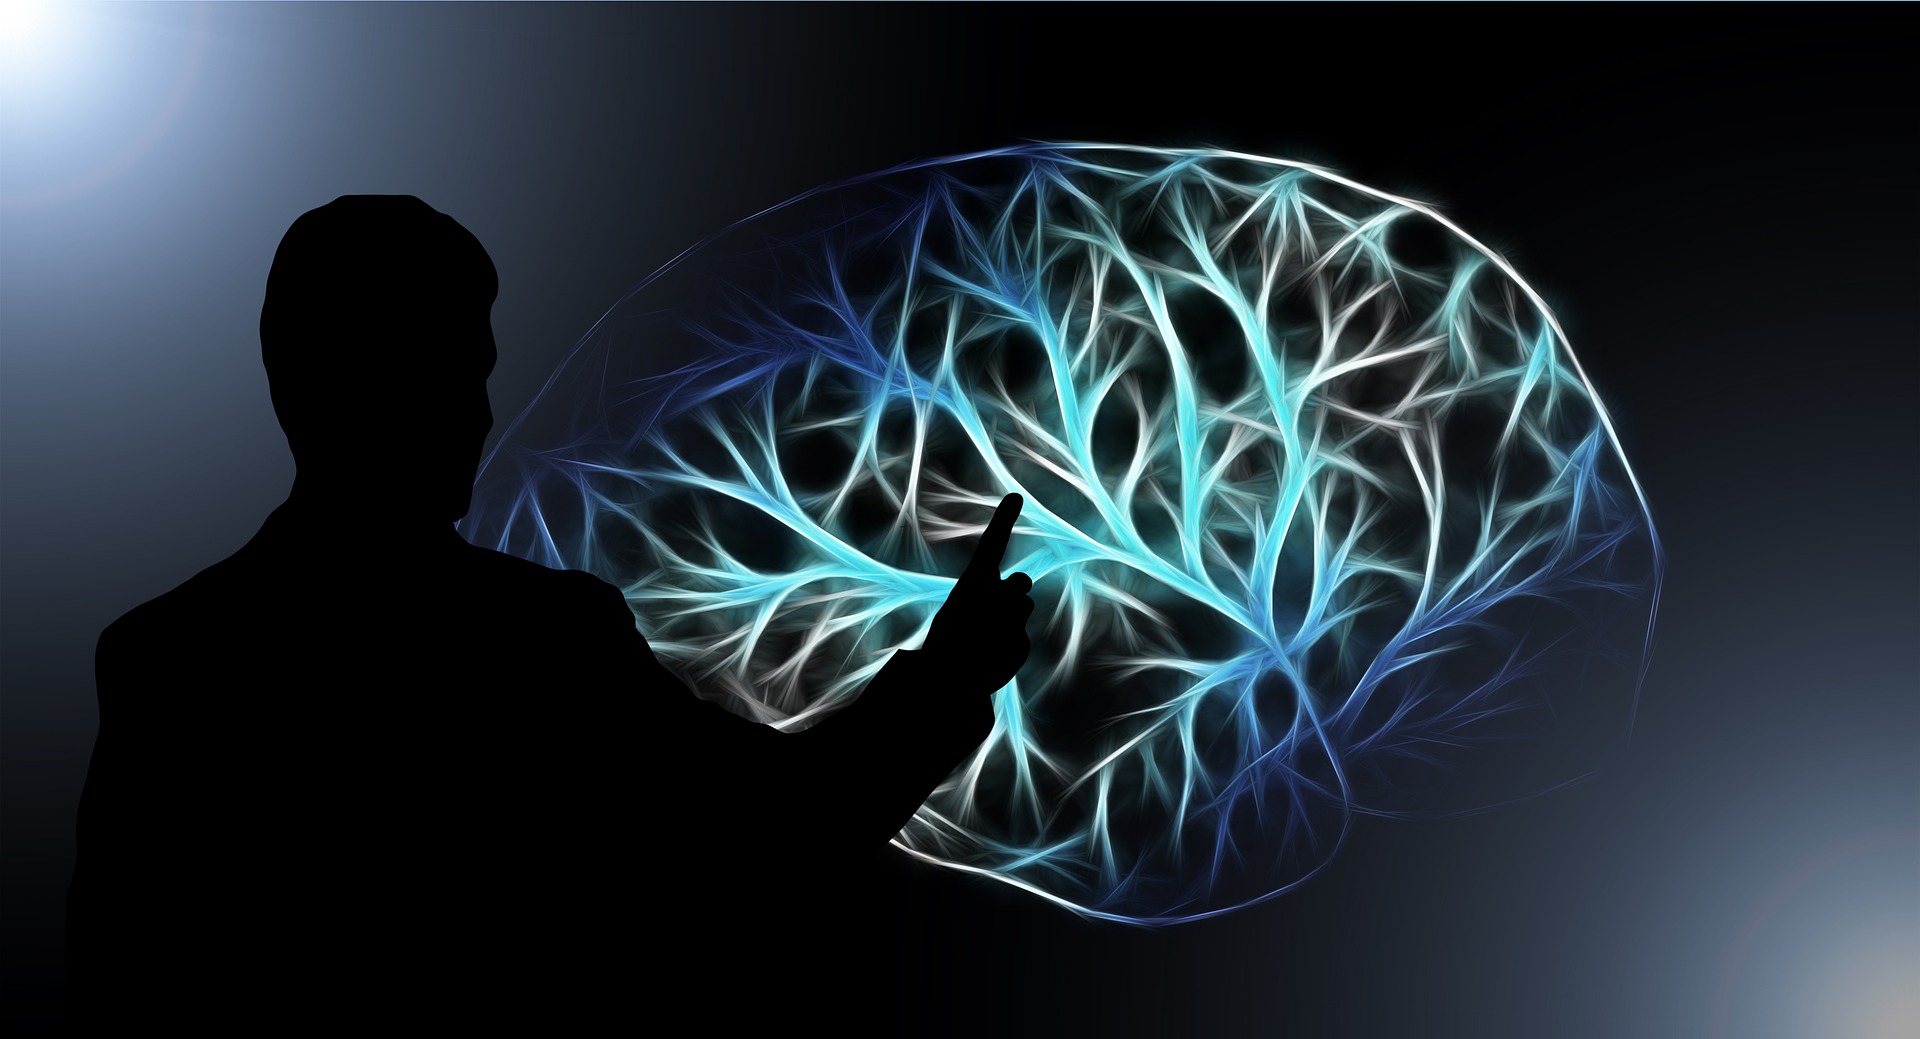  Cerebro e inteligencia